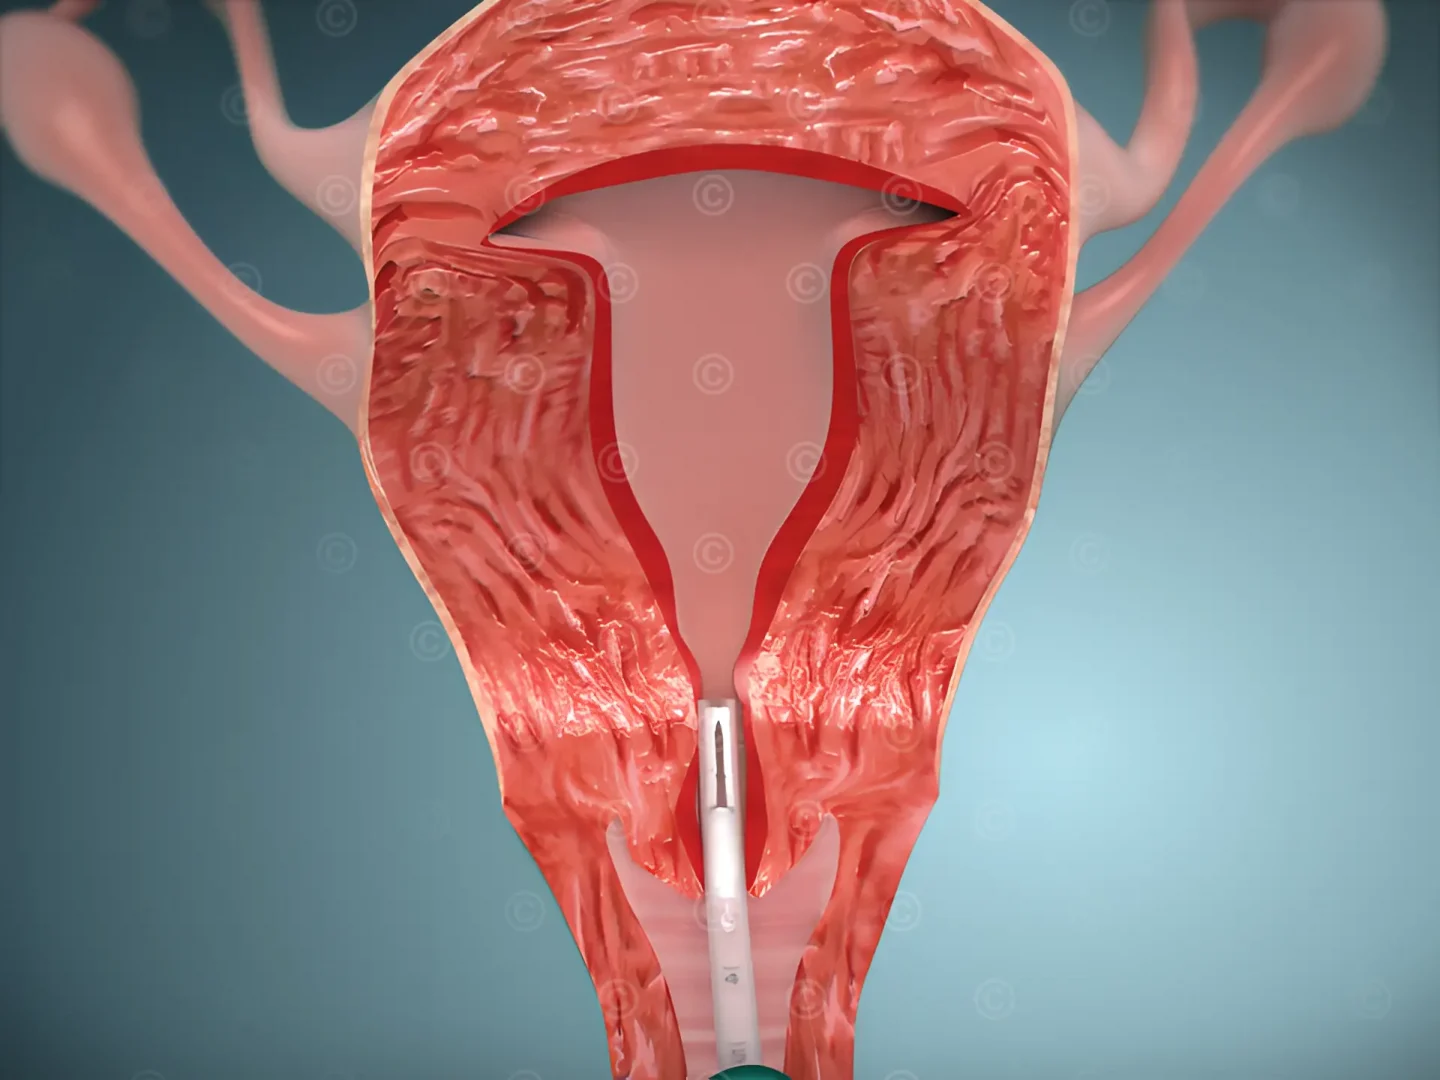 insert-hormonal-intrauterine-device-cervix